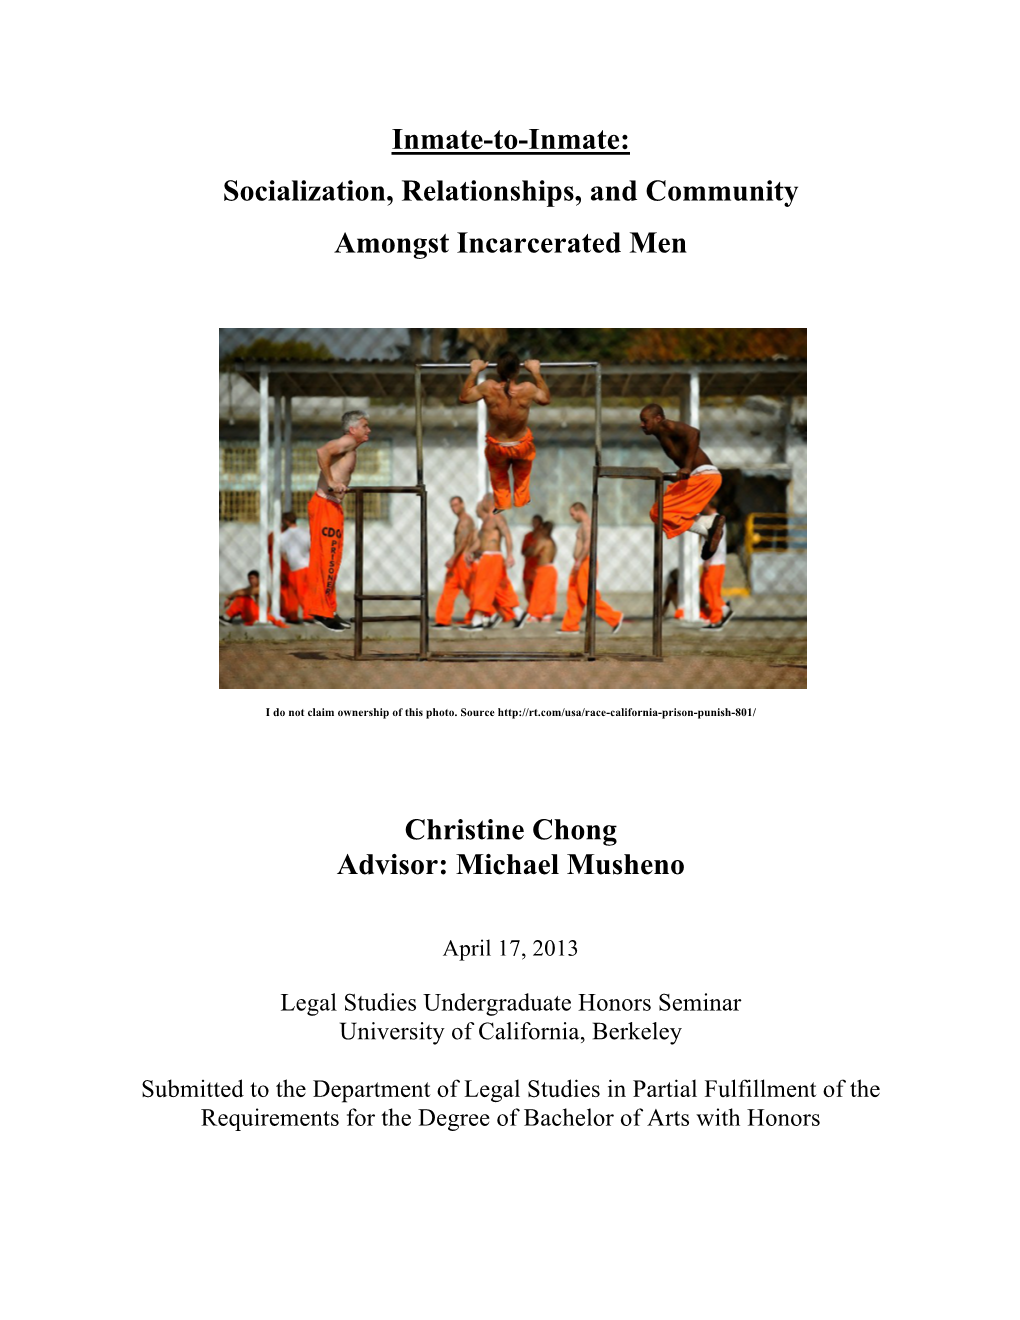 Socialization, Relationships, and Community Amongst Incarcerated Men Christine Chong Advisor